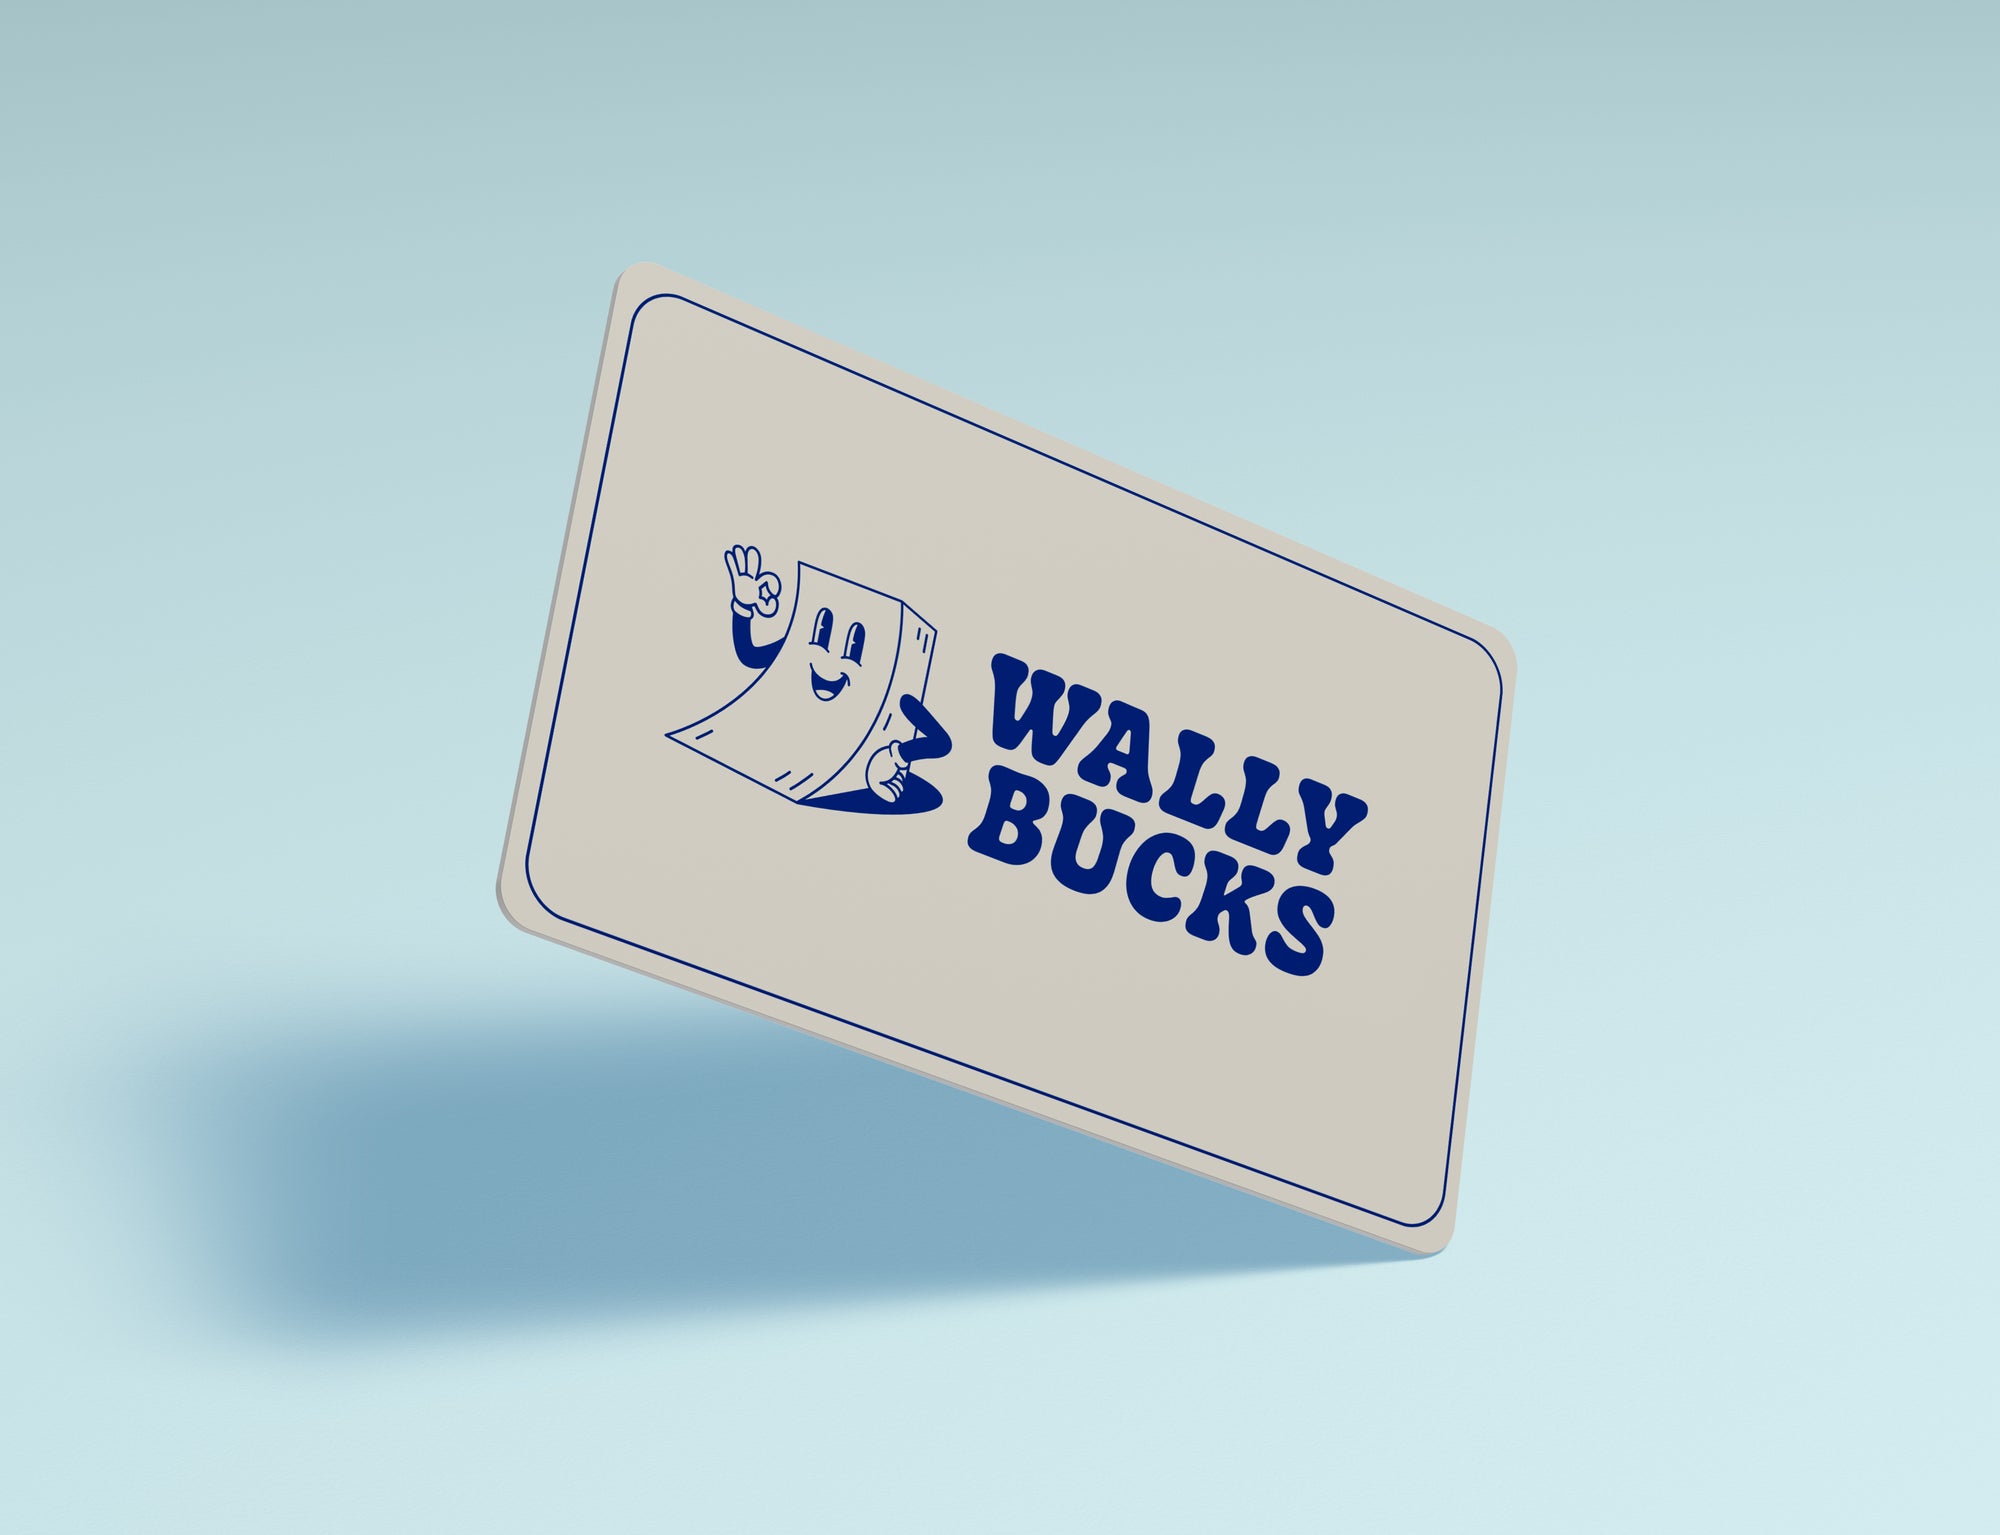 Wally Bucks Gift Card